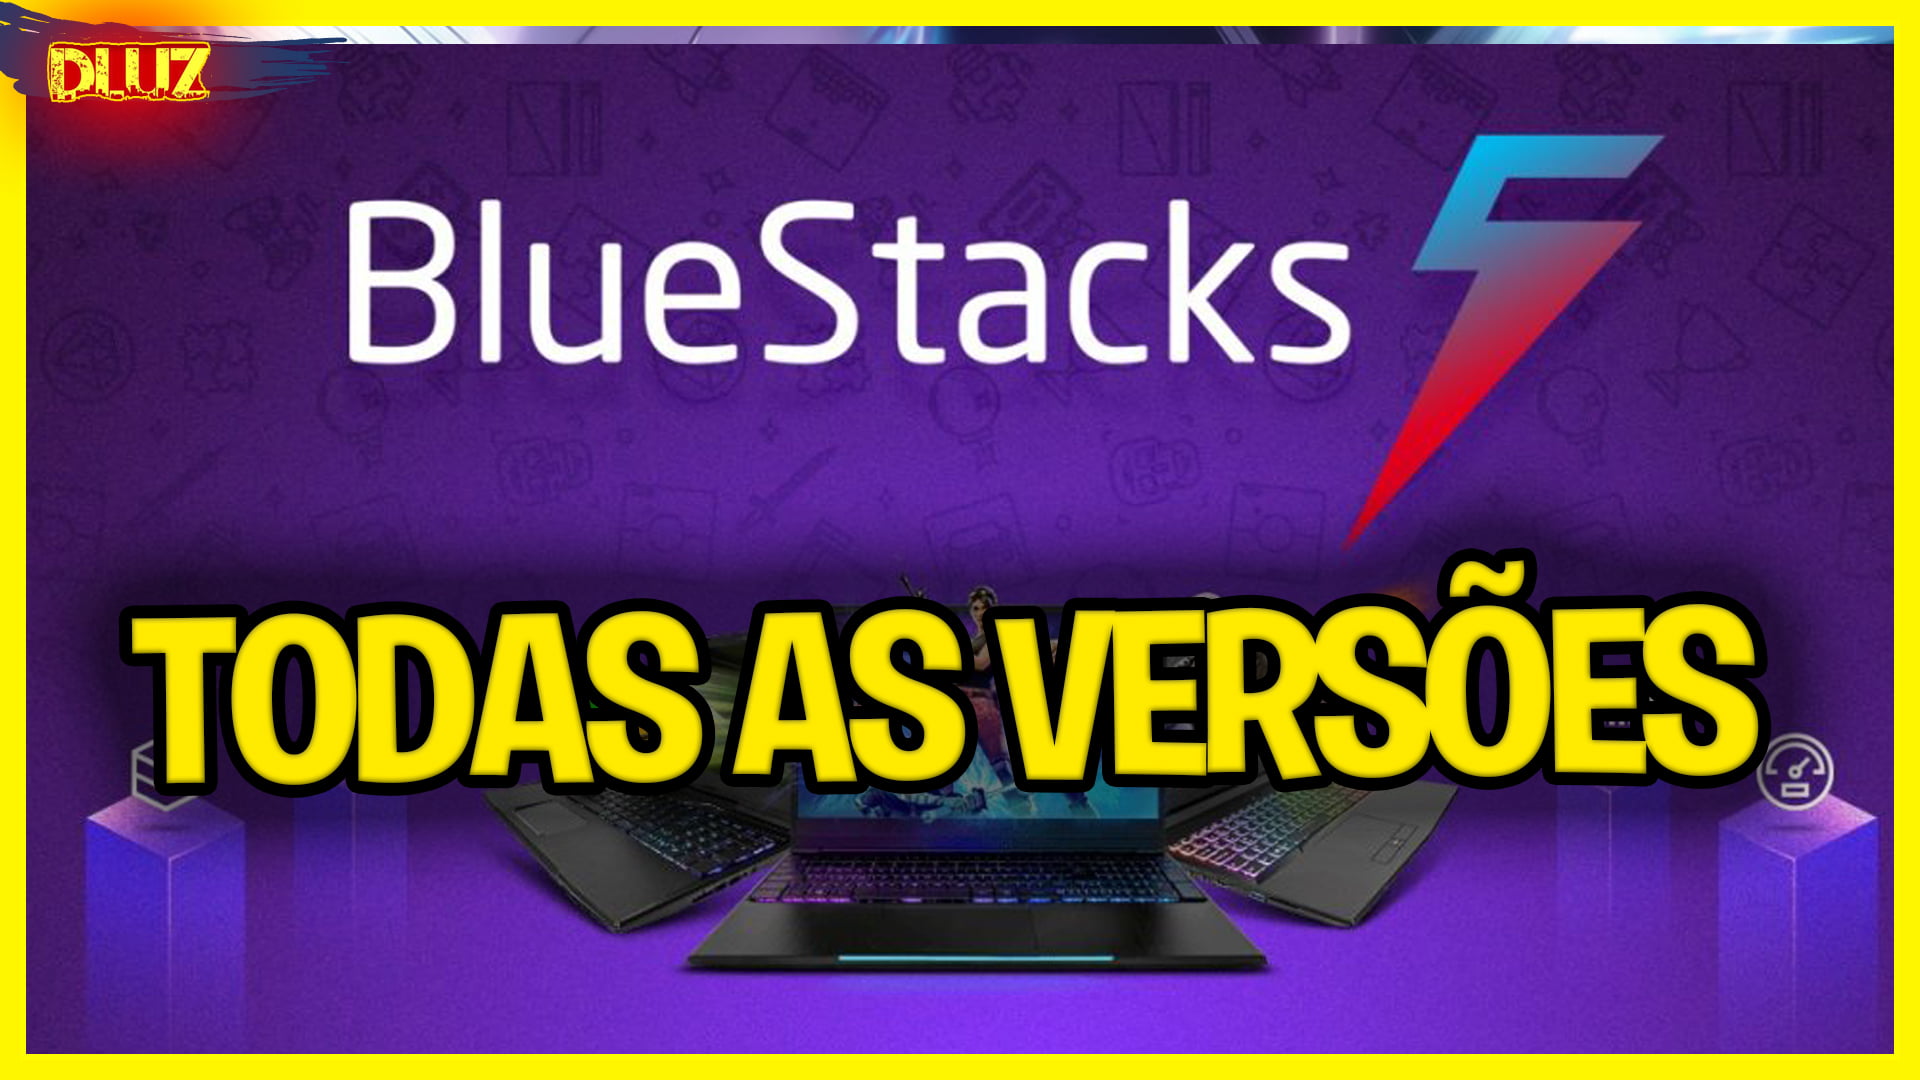 BlueStacks 5.12.108.1002 download the new